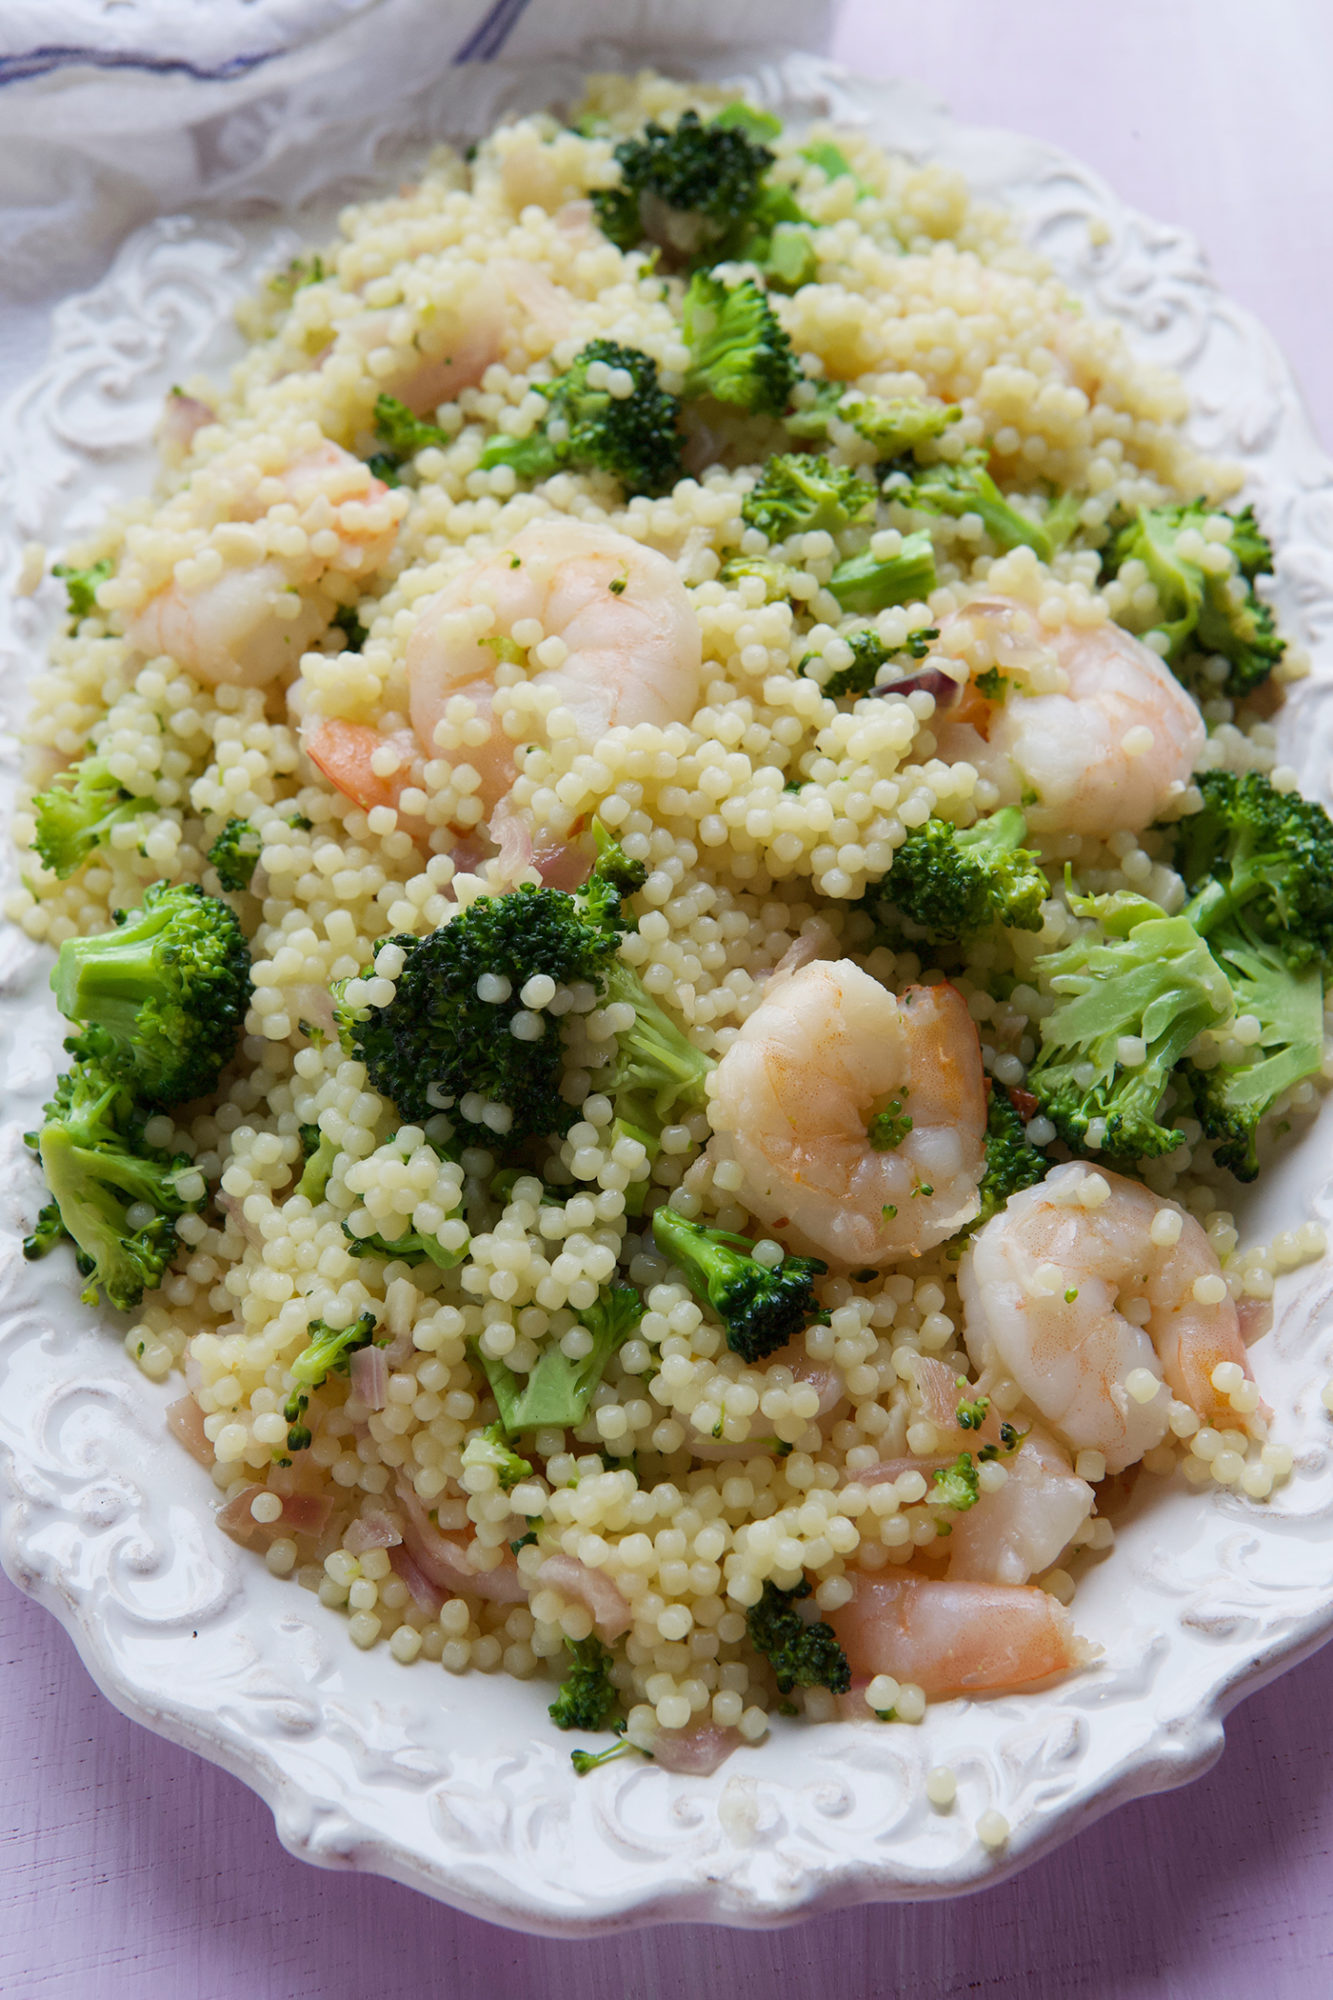 20 Minute Acini de Pepe with Shrimp and Broccoli by Marla Meridith